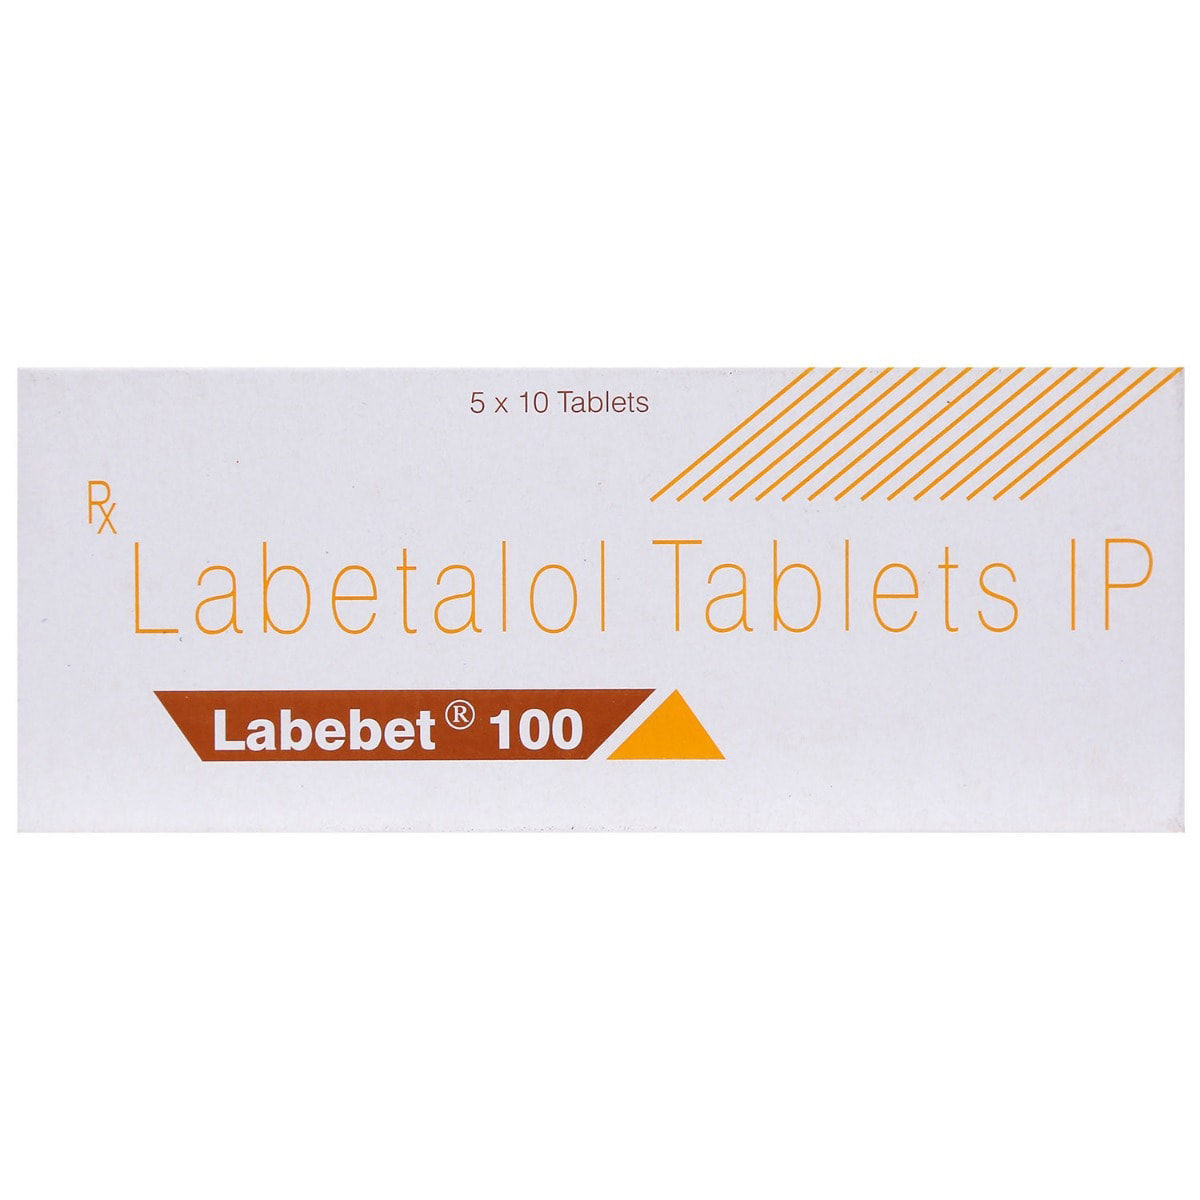 Lobet 20 Mg Injection, Labetalol, Normodyne